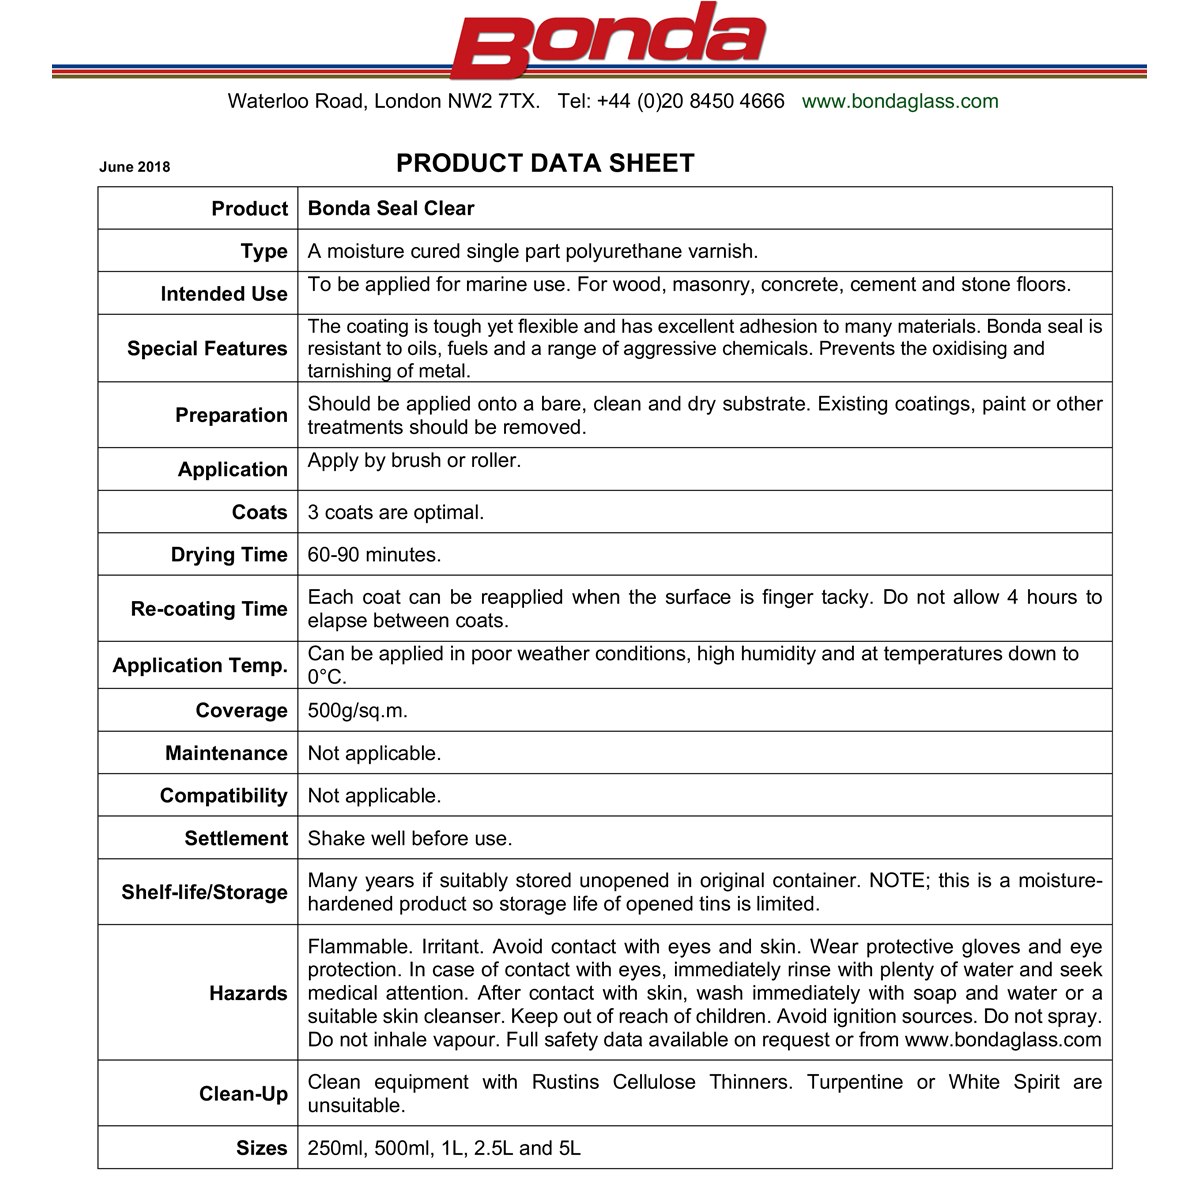 Bonda Seal Clear Usage Instructions